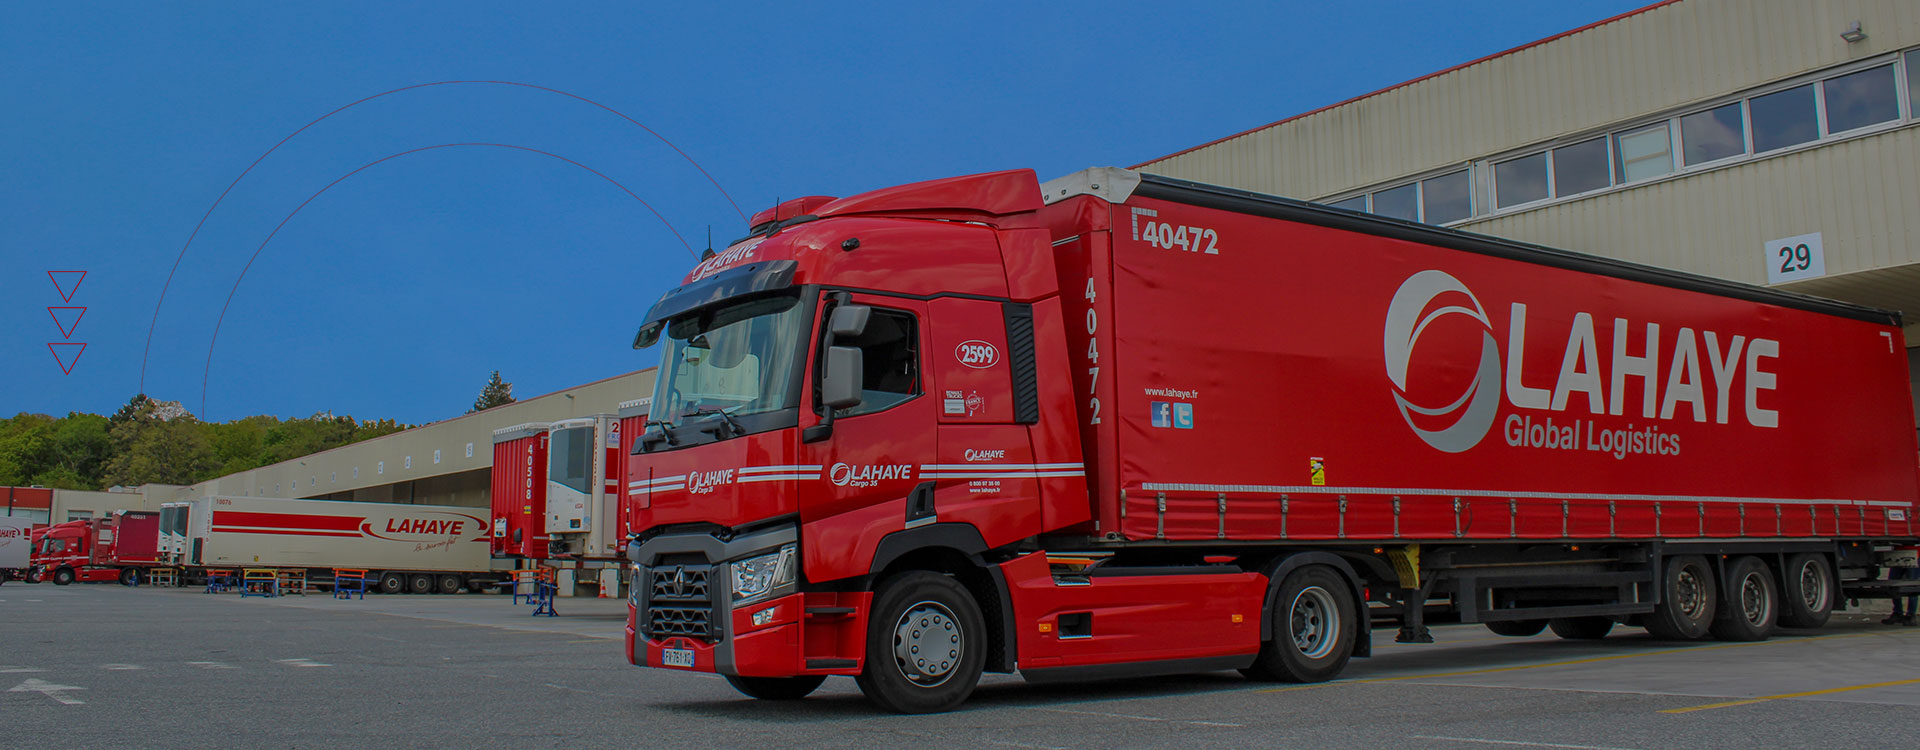 Lahaye Global Logistics Campagne Distribution Header